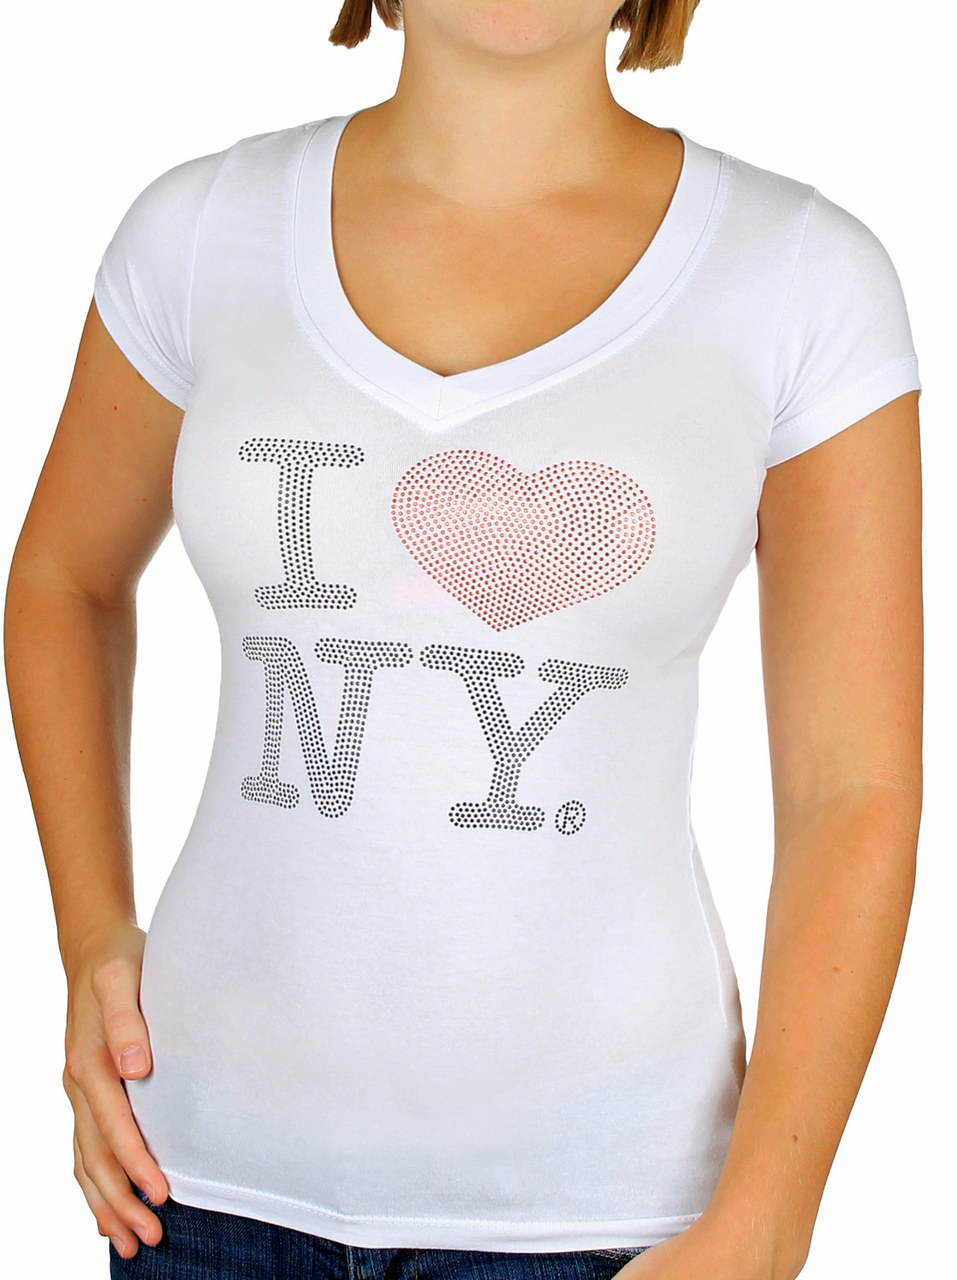 Chicago White Sox Tiara Heart Tee Shirt Women's Small / White